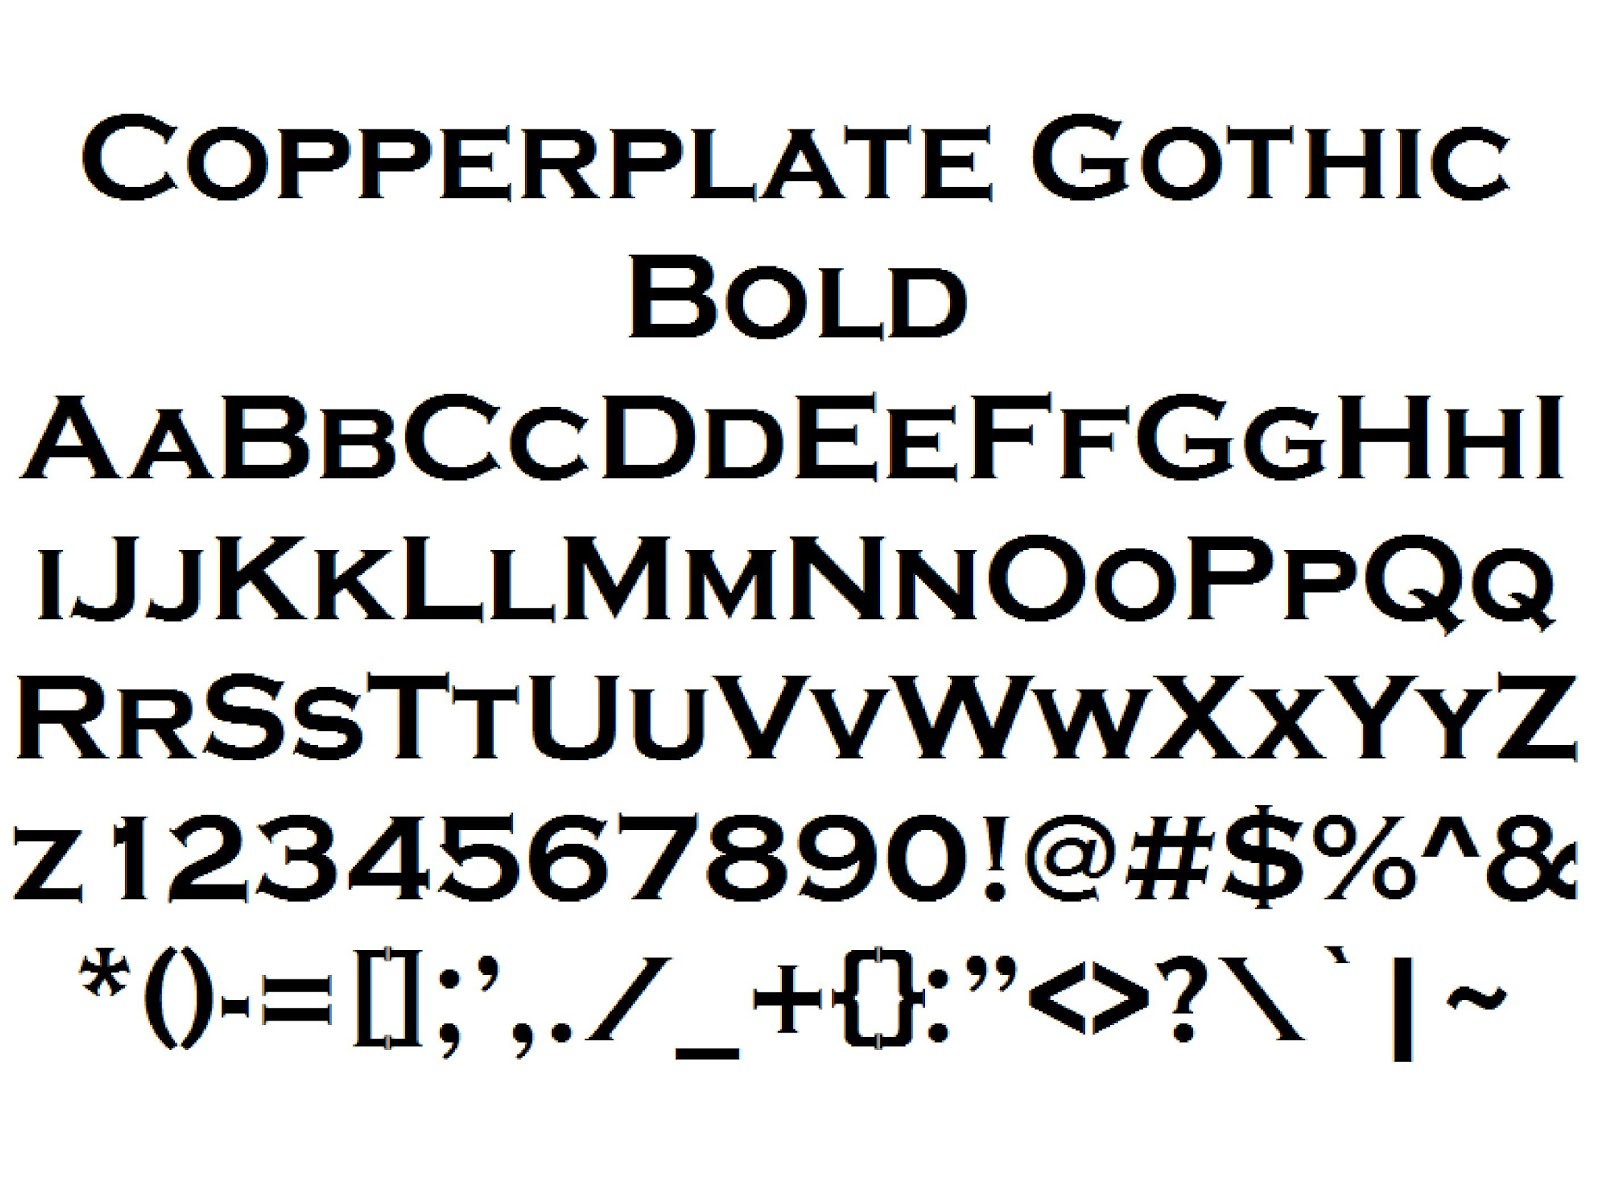 Шрифты bold gothic. Шрифт Bold. Copperplate Gothic шрифт. Copperplate Gothic Bold. Copperplate Gothic Bold шрифт.